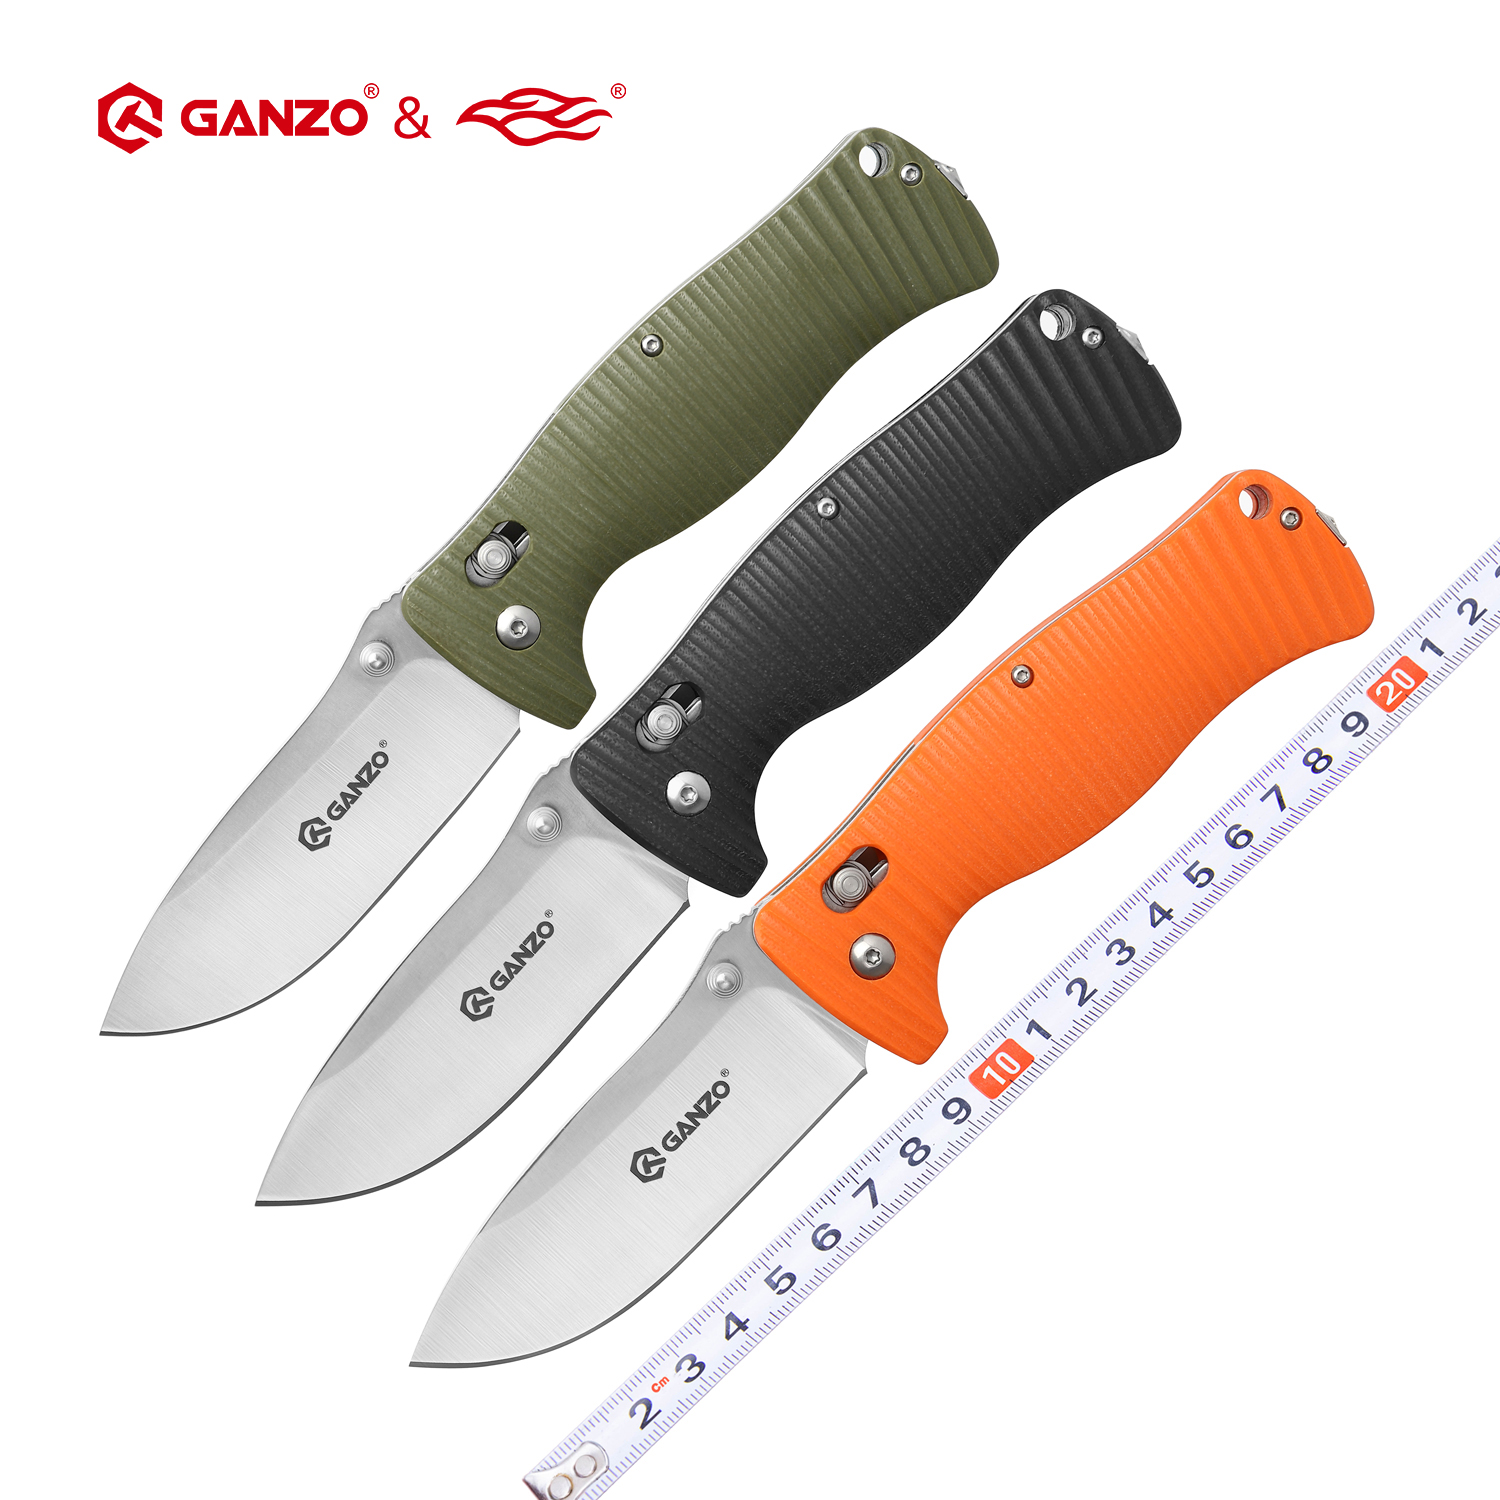 

Firebird Ganzo F720 G720 440C blade G10 Handle EDC Folding knife Survival Camping tool Hunting Pocket Knife tactical edc outdoor tool